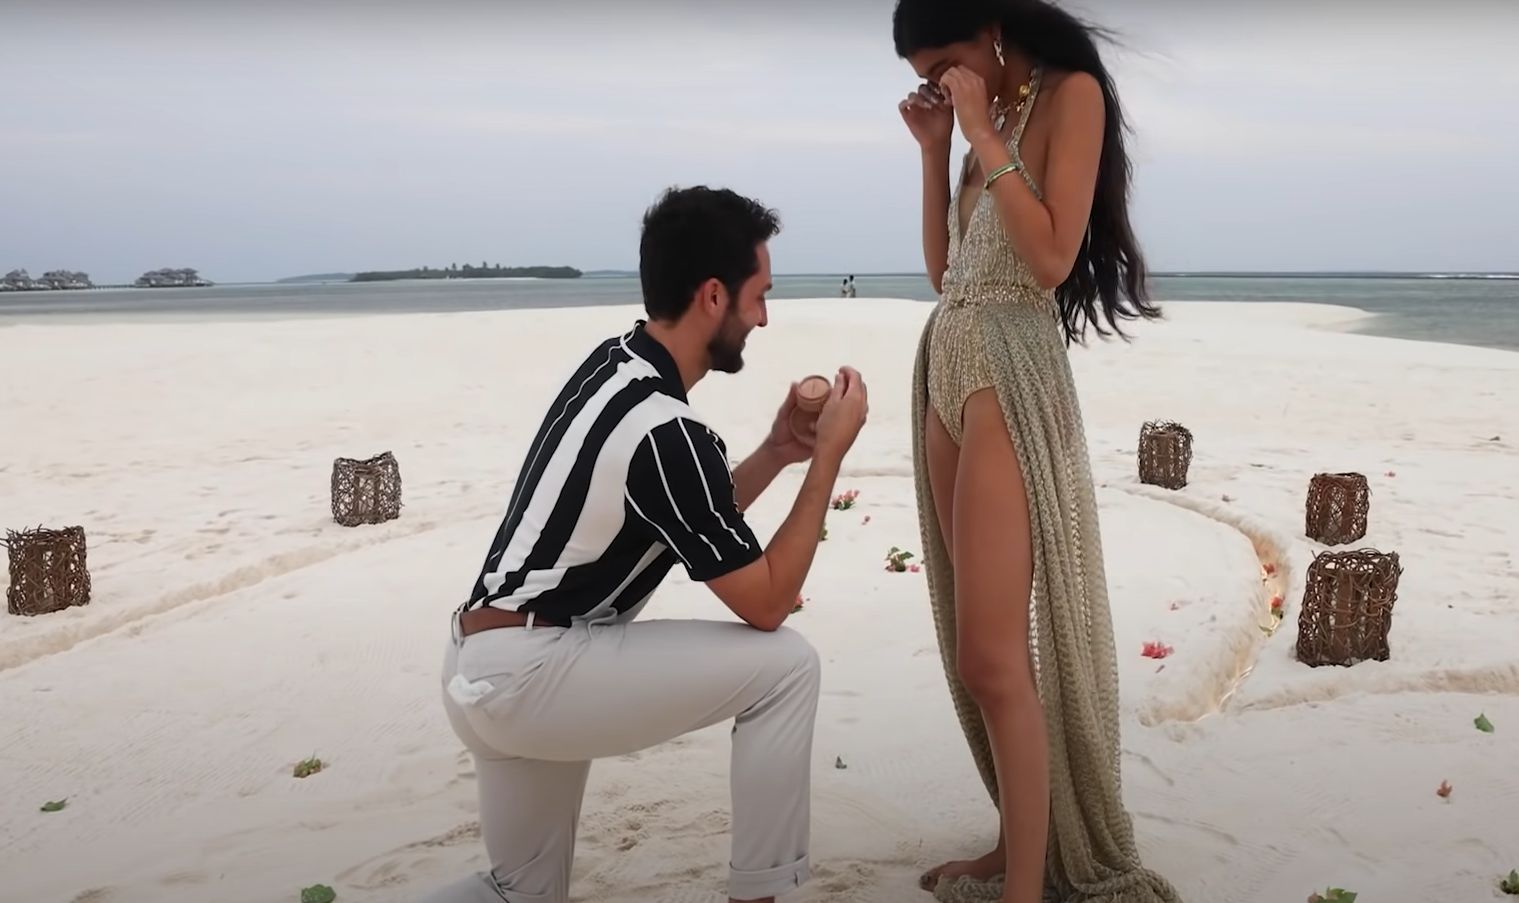 Ivor proposing his girlfriend Alanna in Maldives